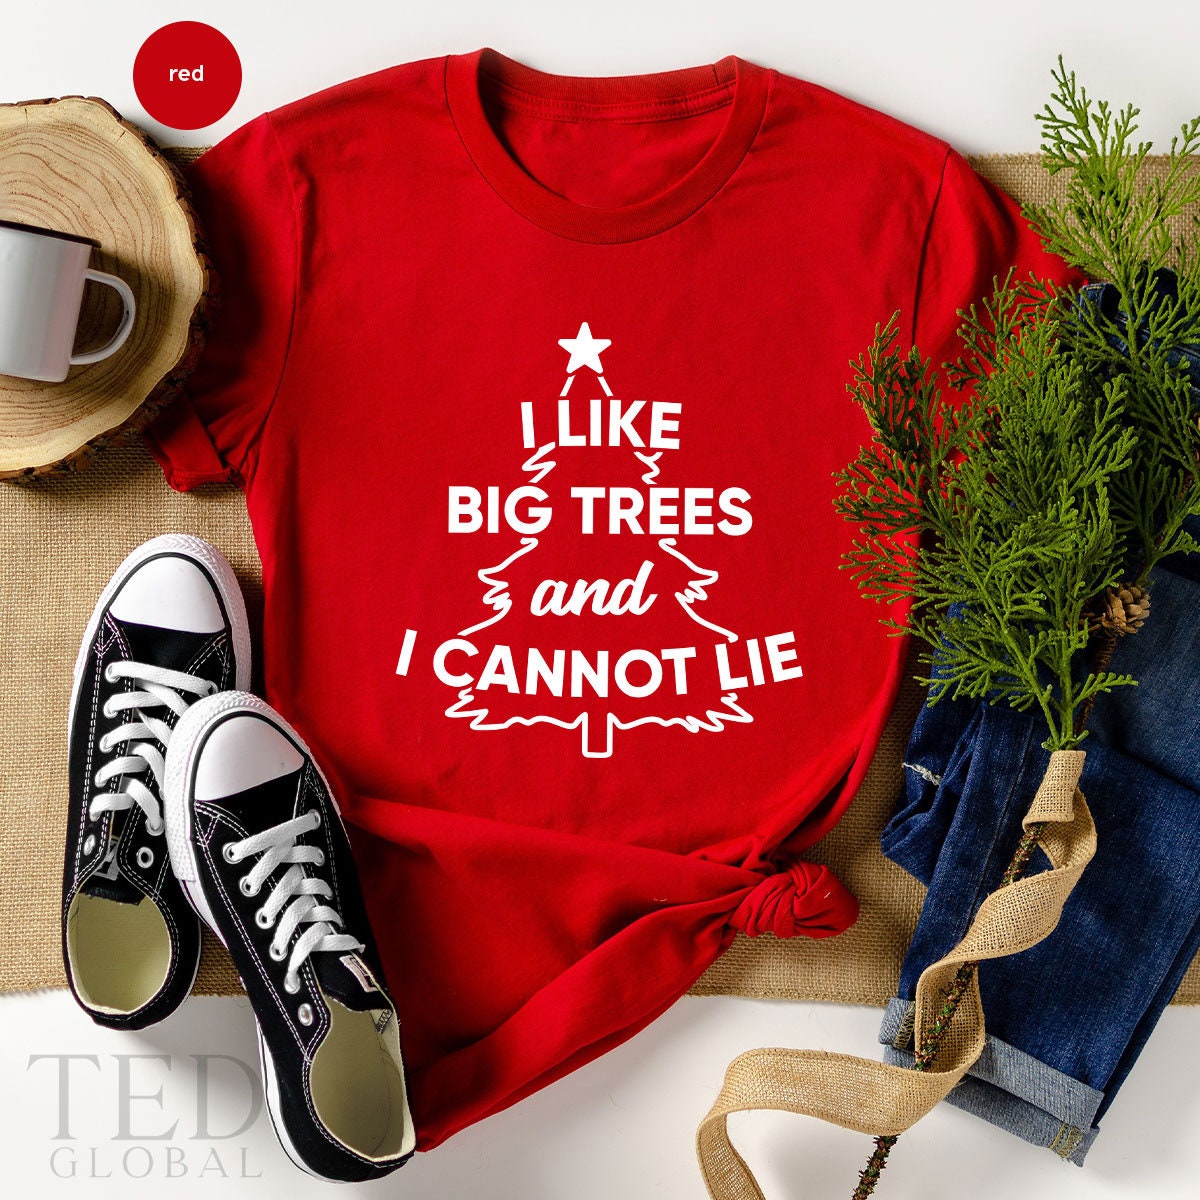 Christmas T-Shirt, I Like Big Trees And I Cannot Lie T Shirt, Family Christmas Shirts, Happy Winter Shirt, Xmas TShirt, Gift For Christmas - Fastdeliverytees.com